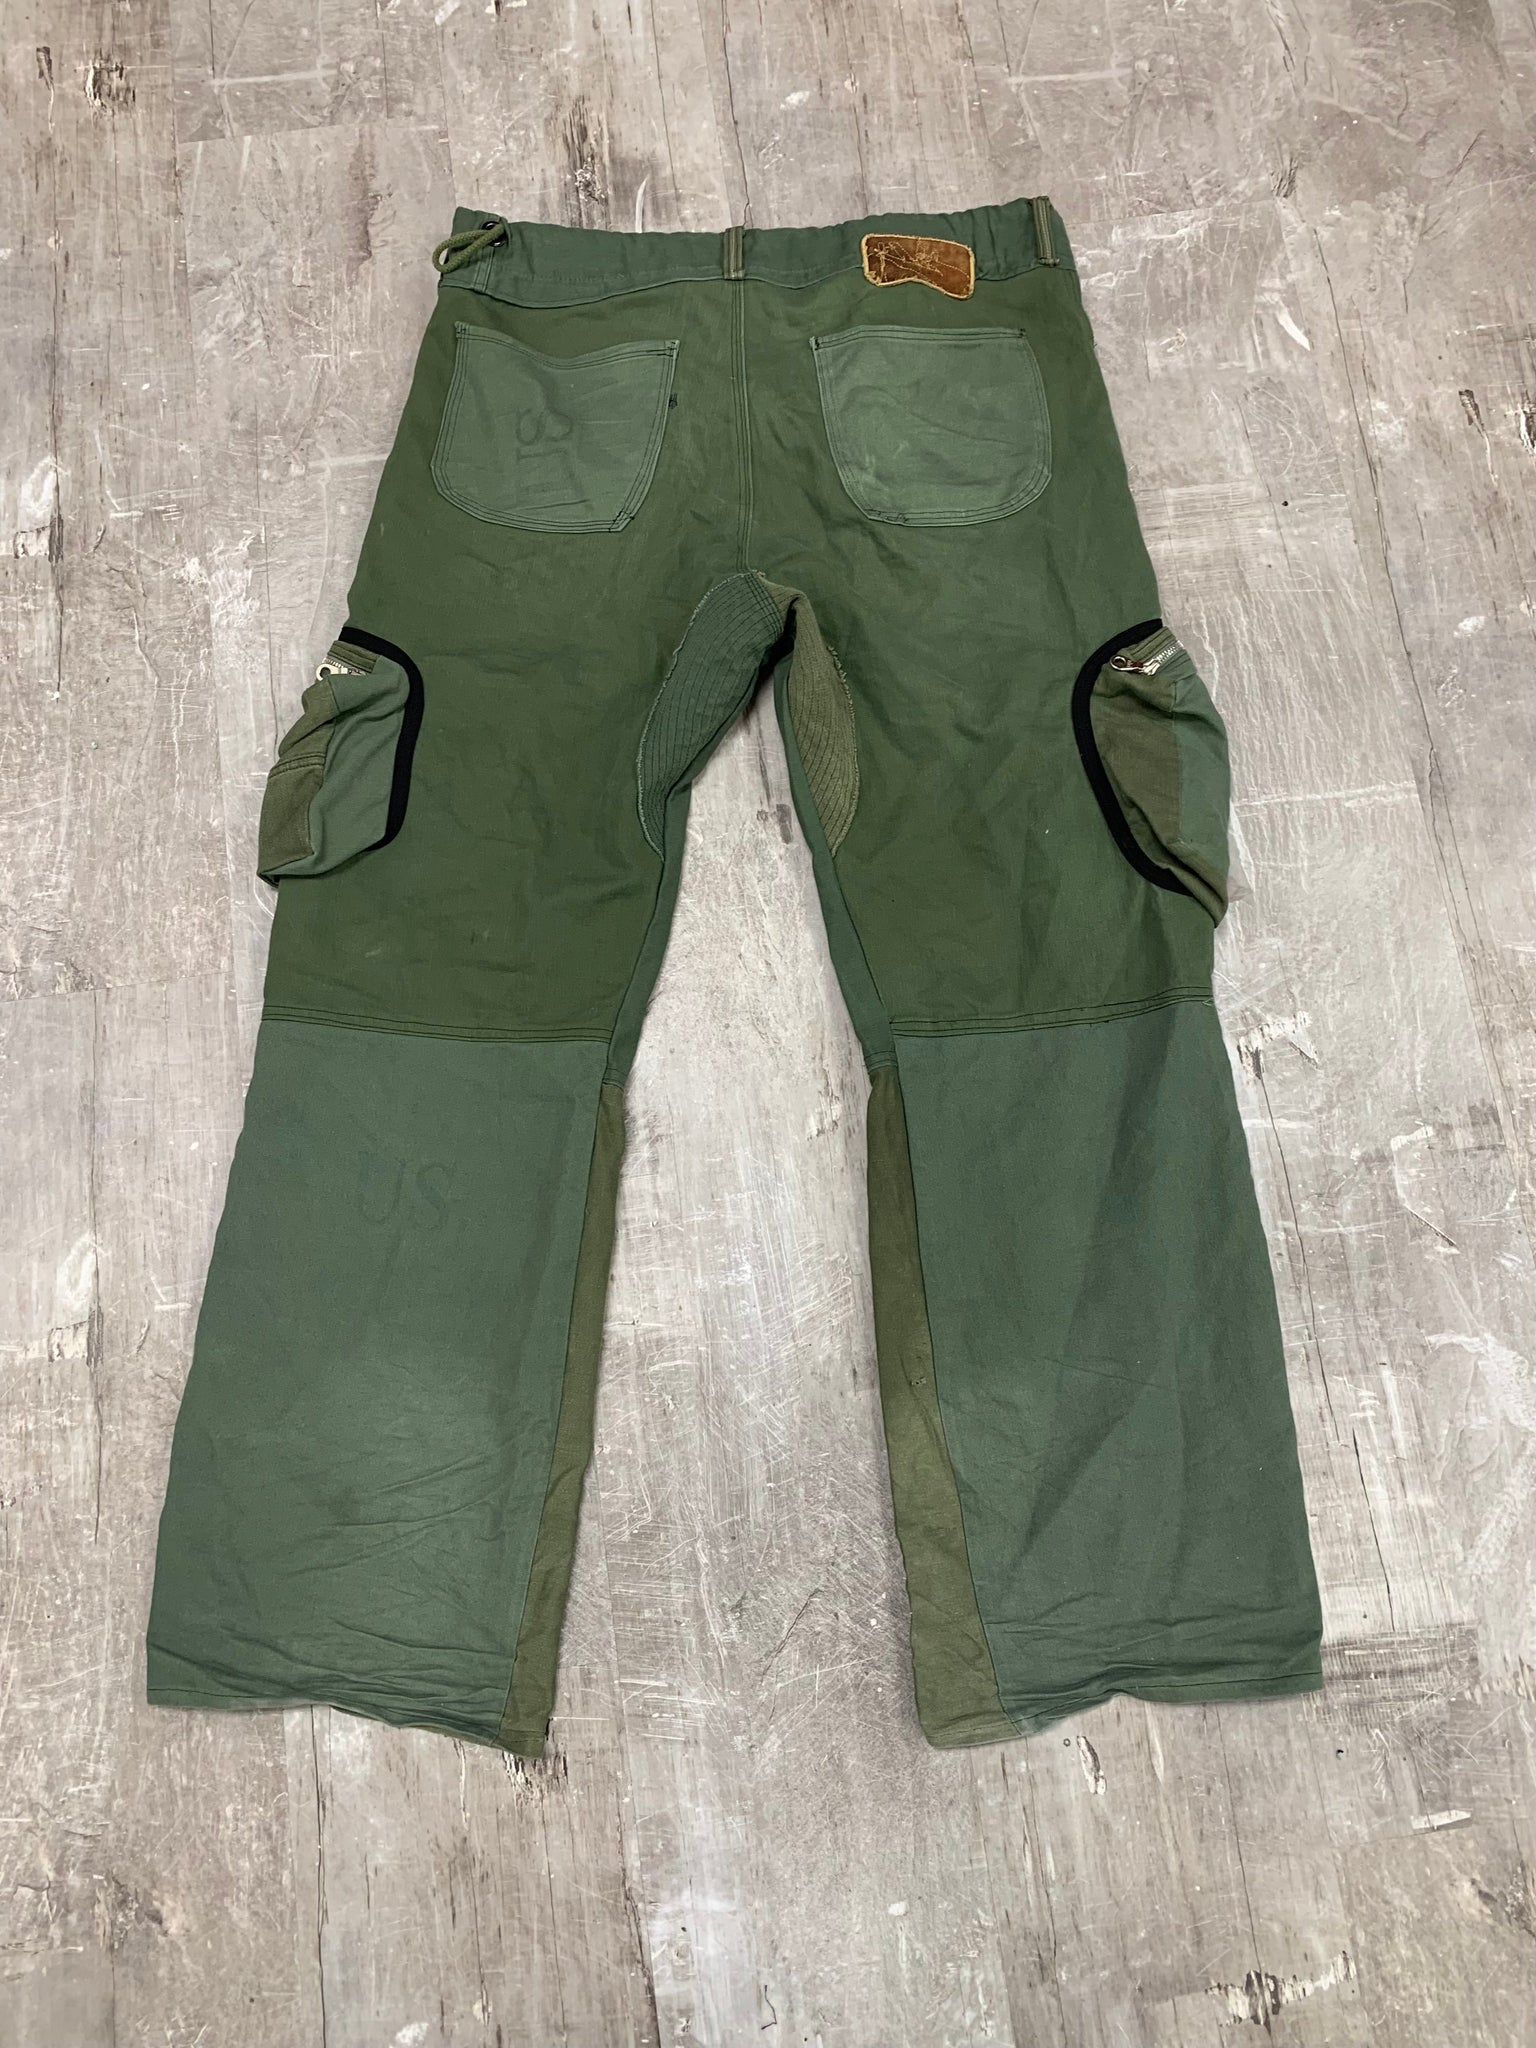 Army Bag Cargo Pants - 38x34